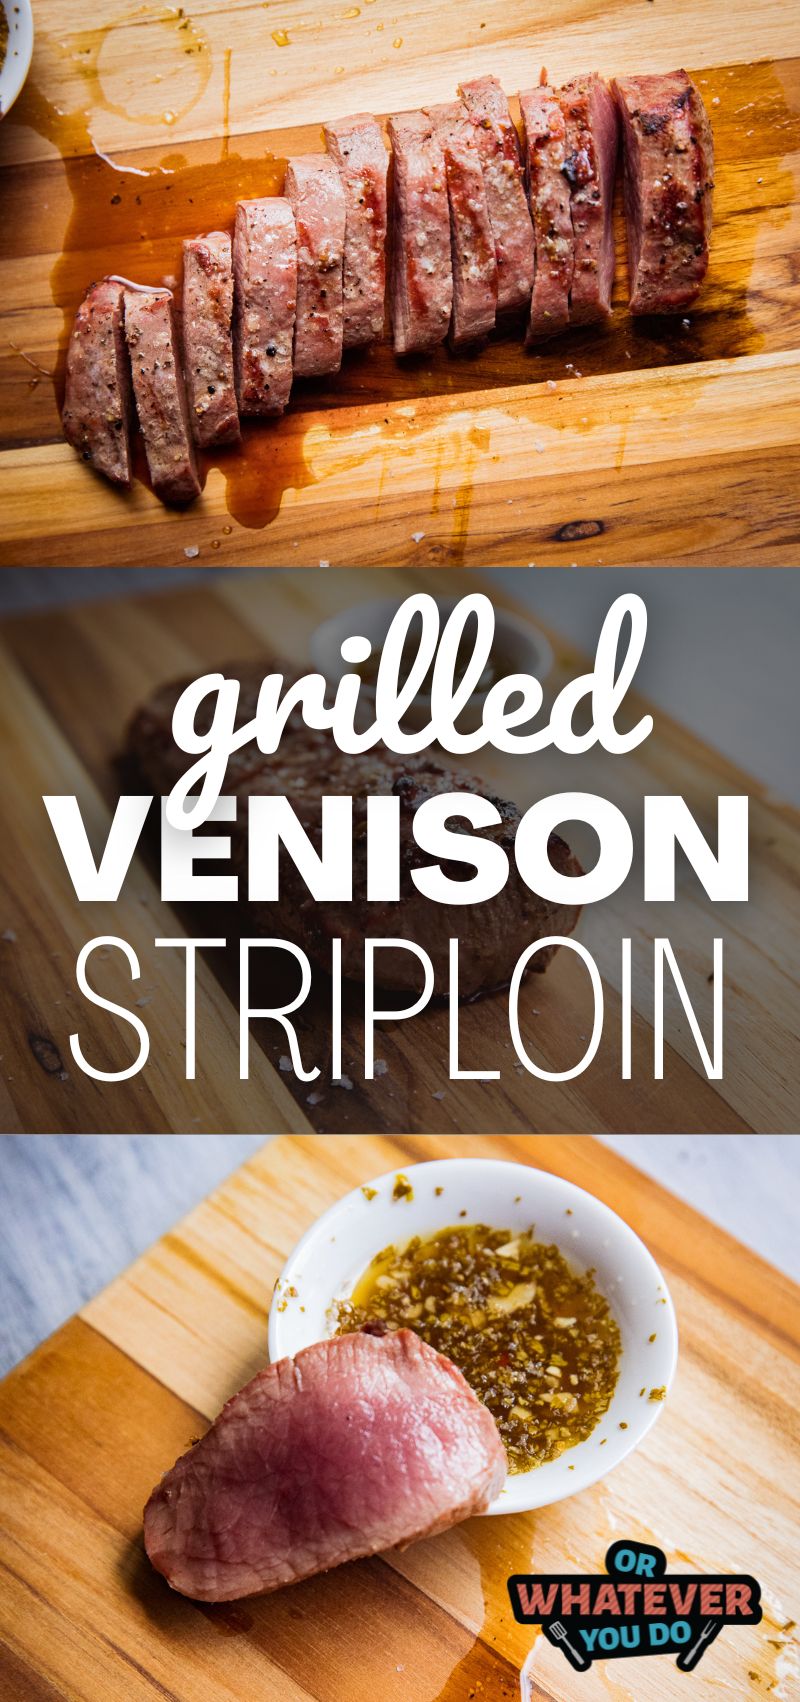 Traeger Grilled Venison Striploin